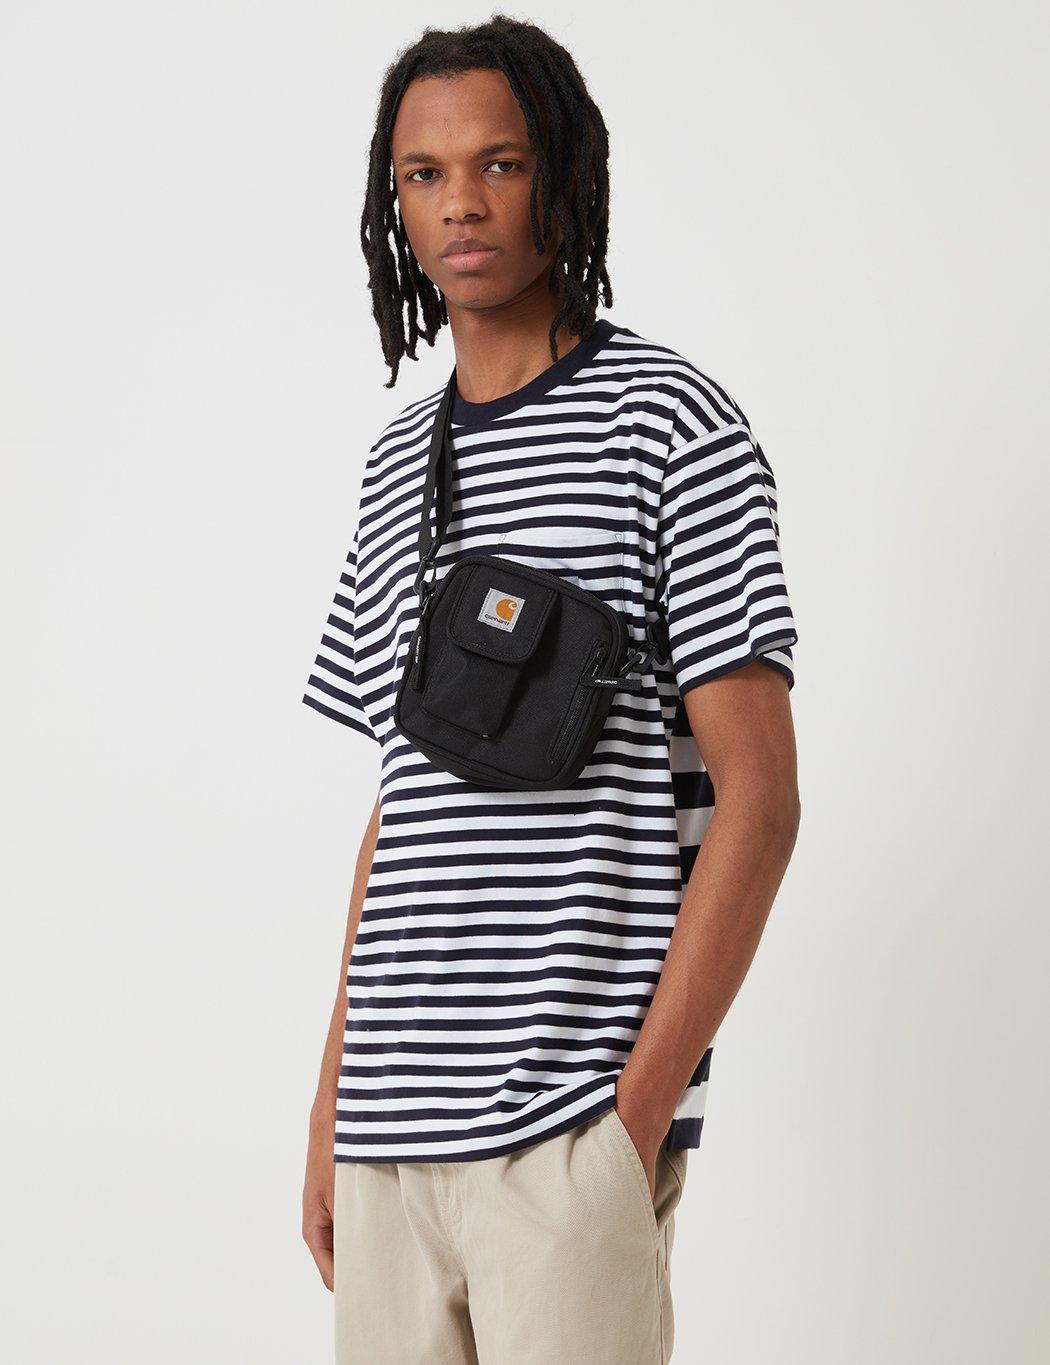 Carhartt Wip Mens Essential Side Bag in Black for Men - Save 30% - Lyst